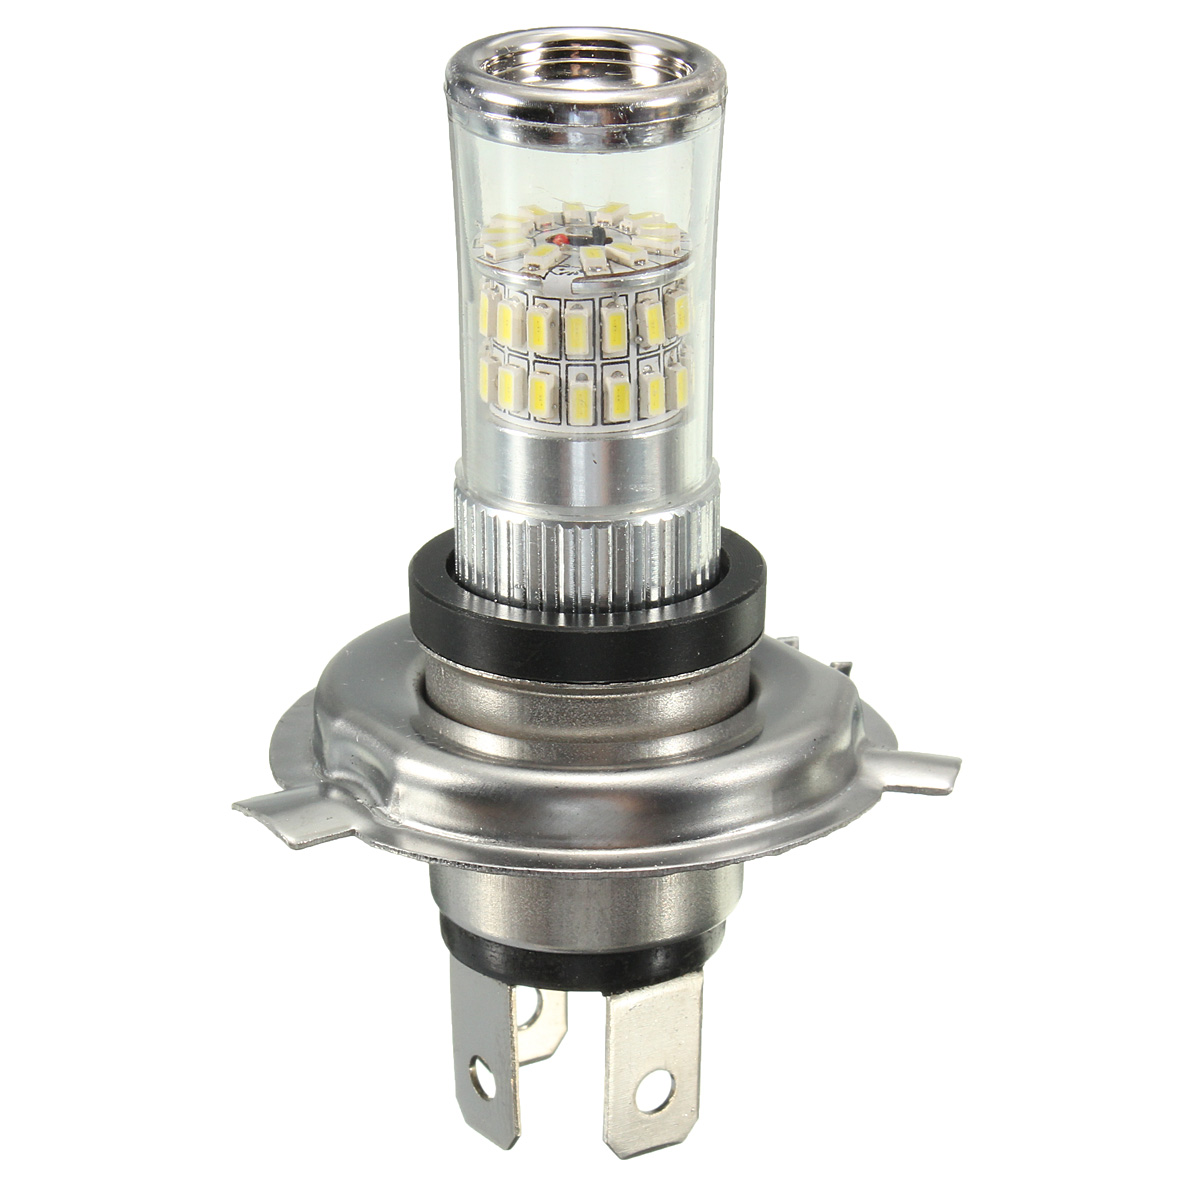 

H4 48W Xenon White LED Fog Light Projector Driving Daytime DRL Headlight